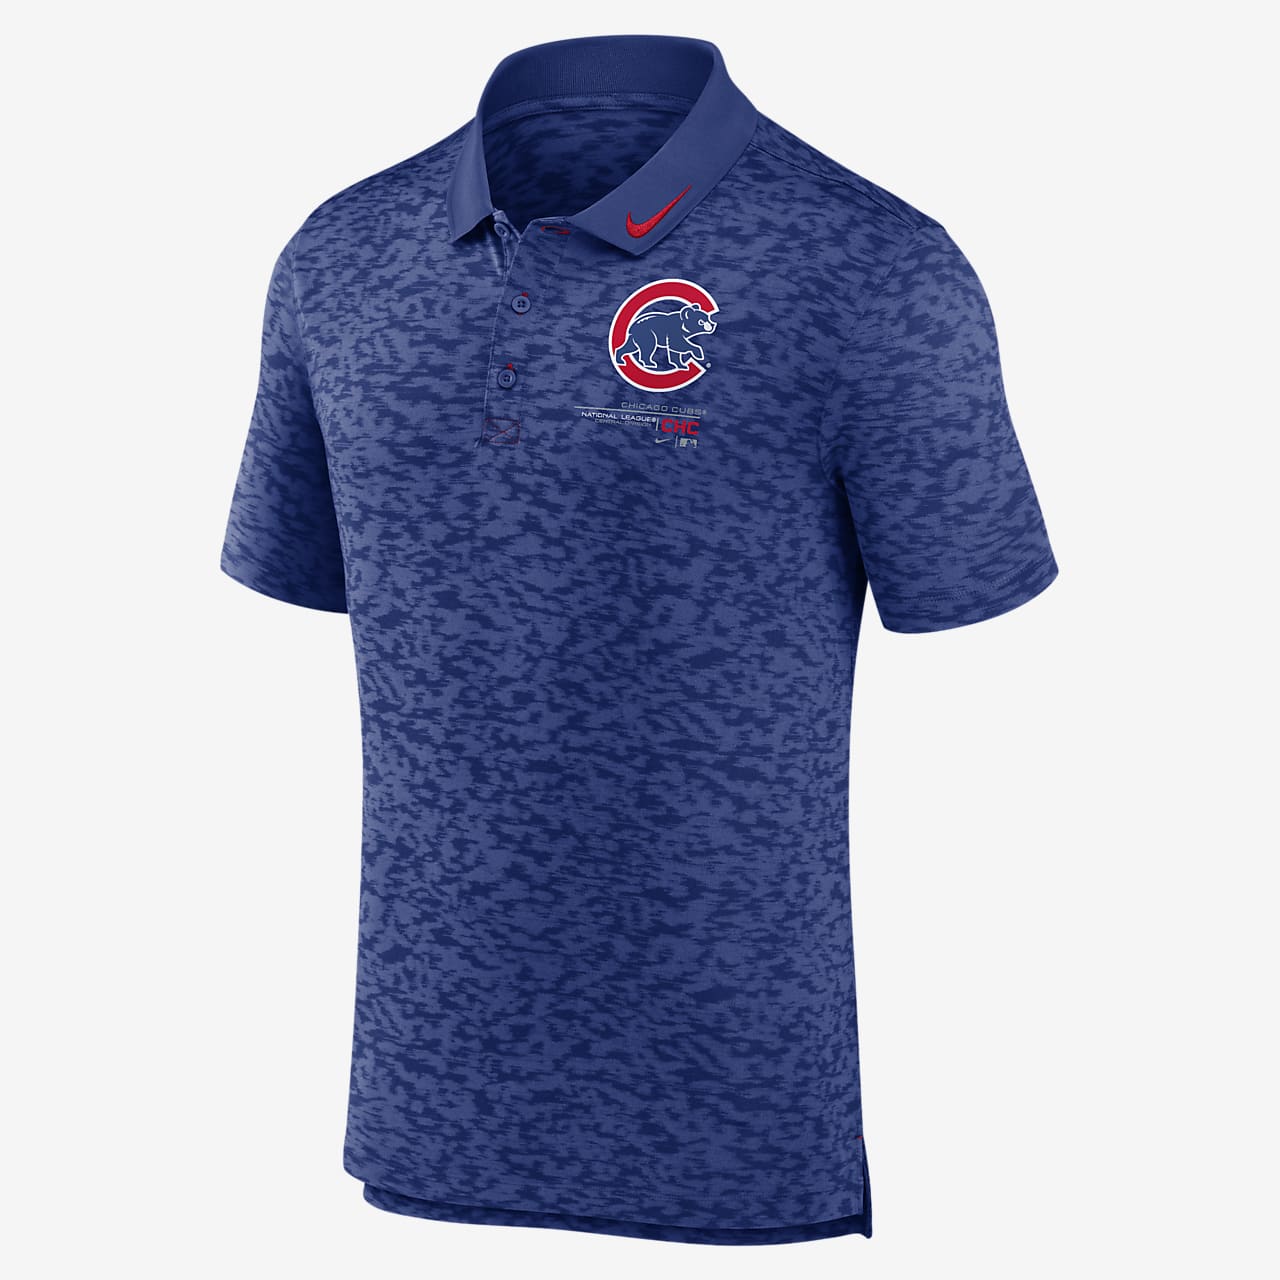 Nike Next Level (MLB Chicago Cubs) Men's Polo